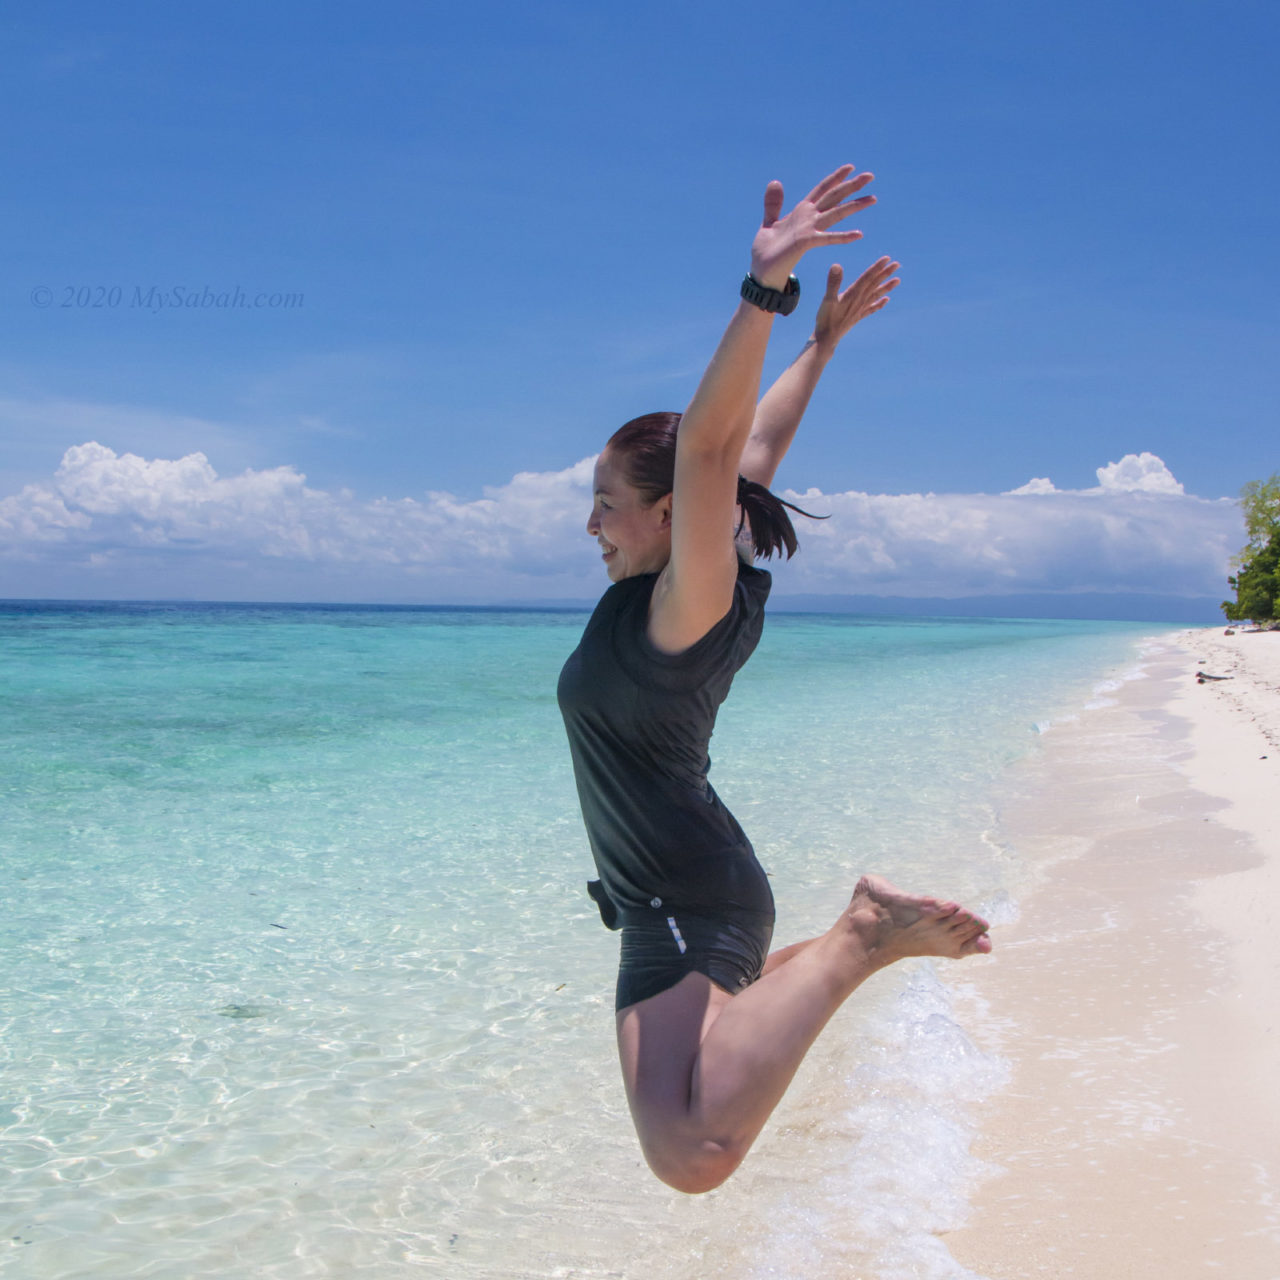 Jumping on the beach of Sibuan Island